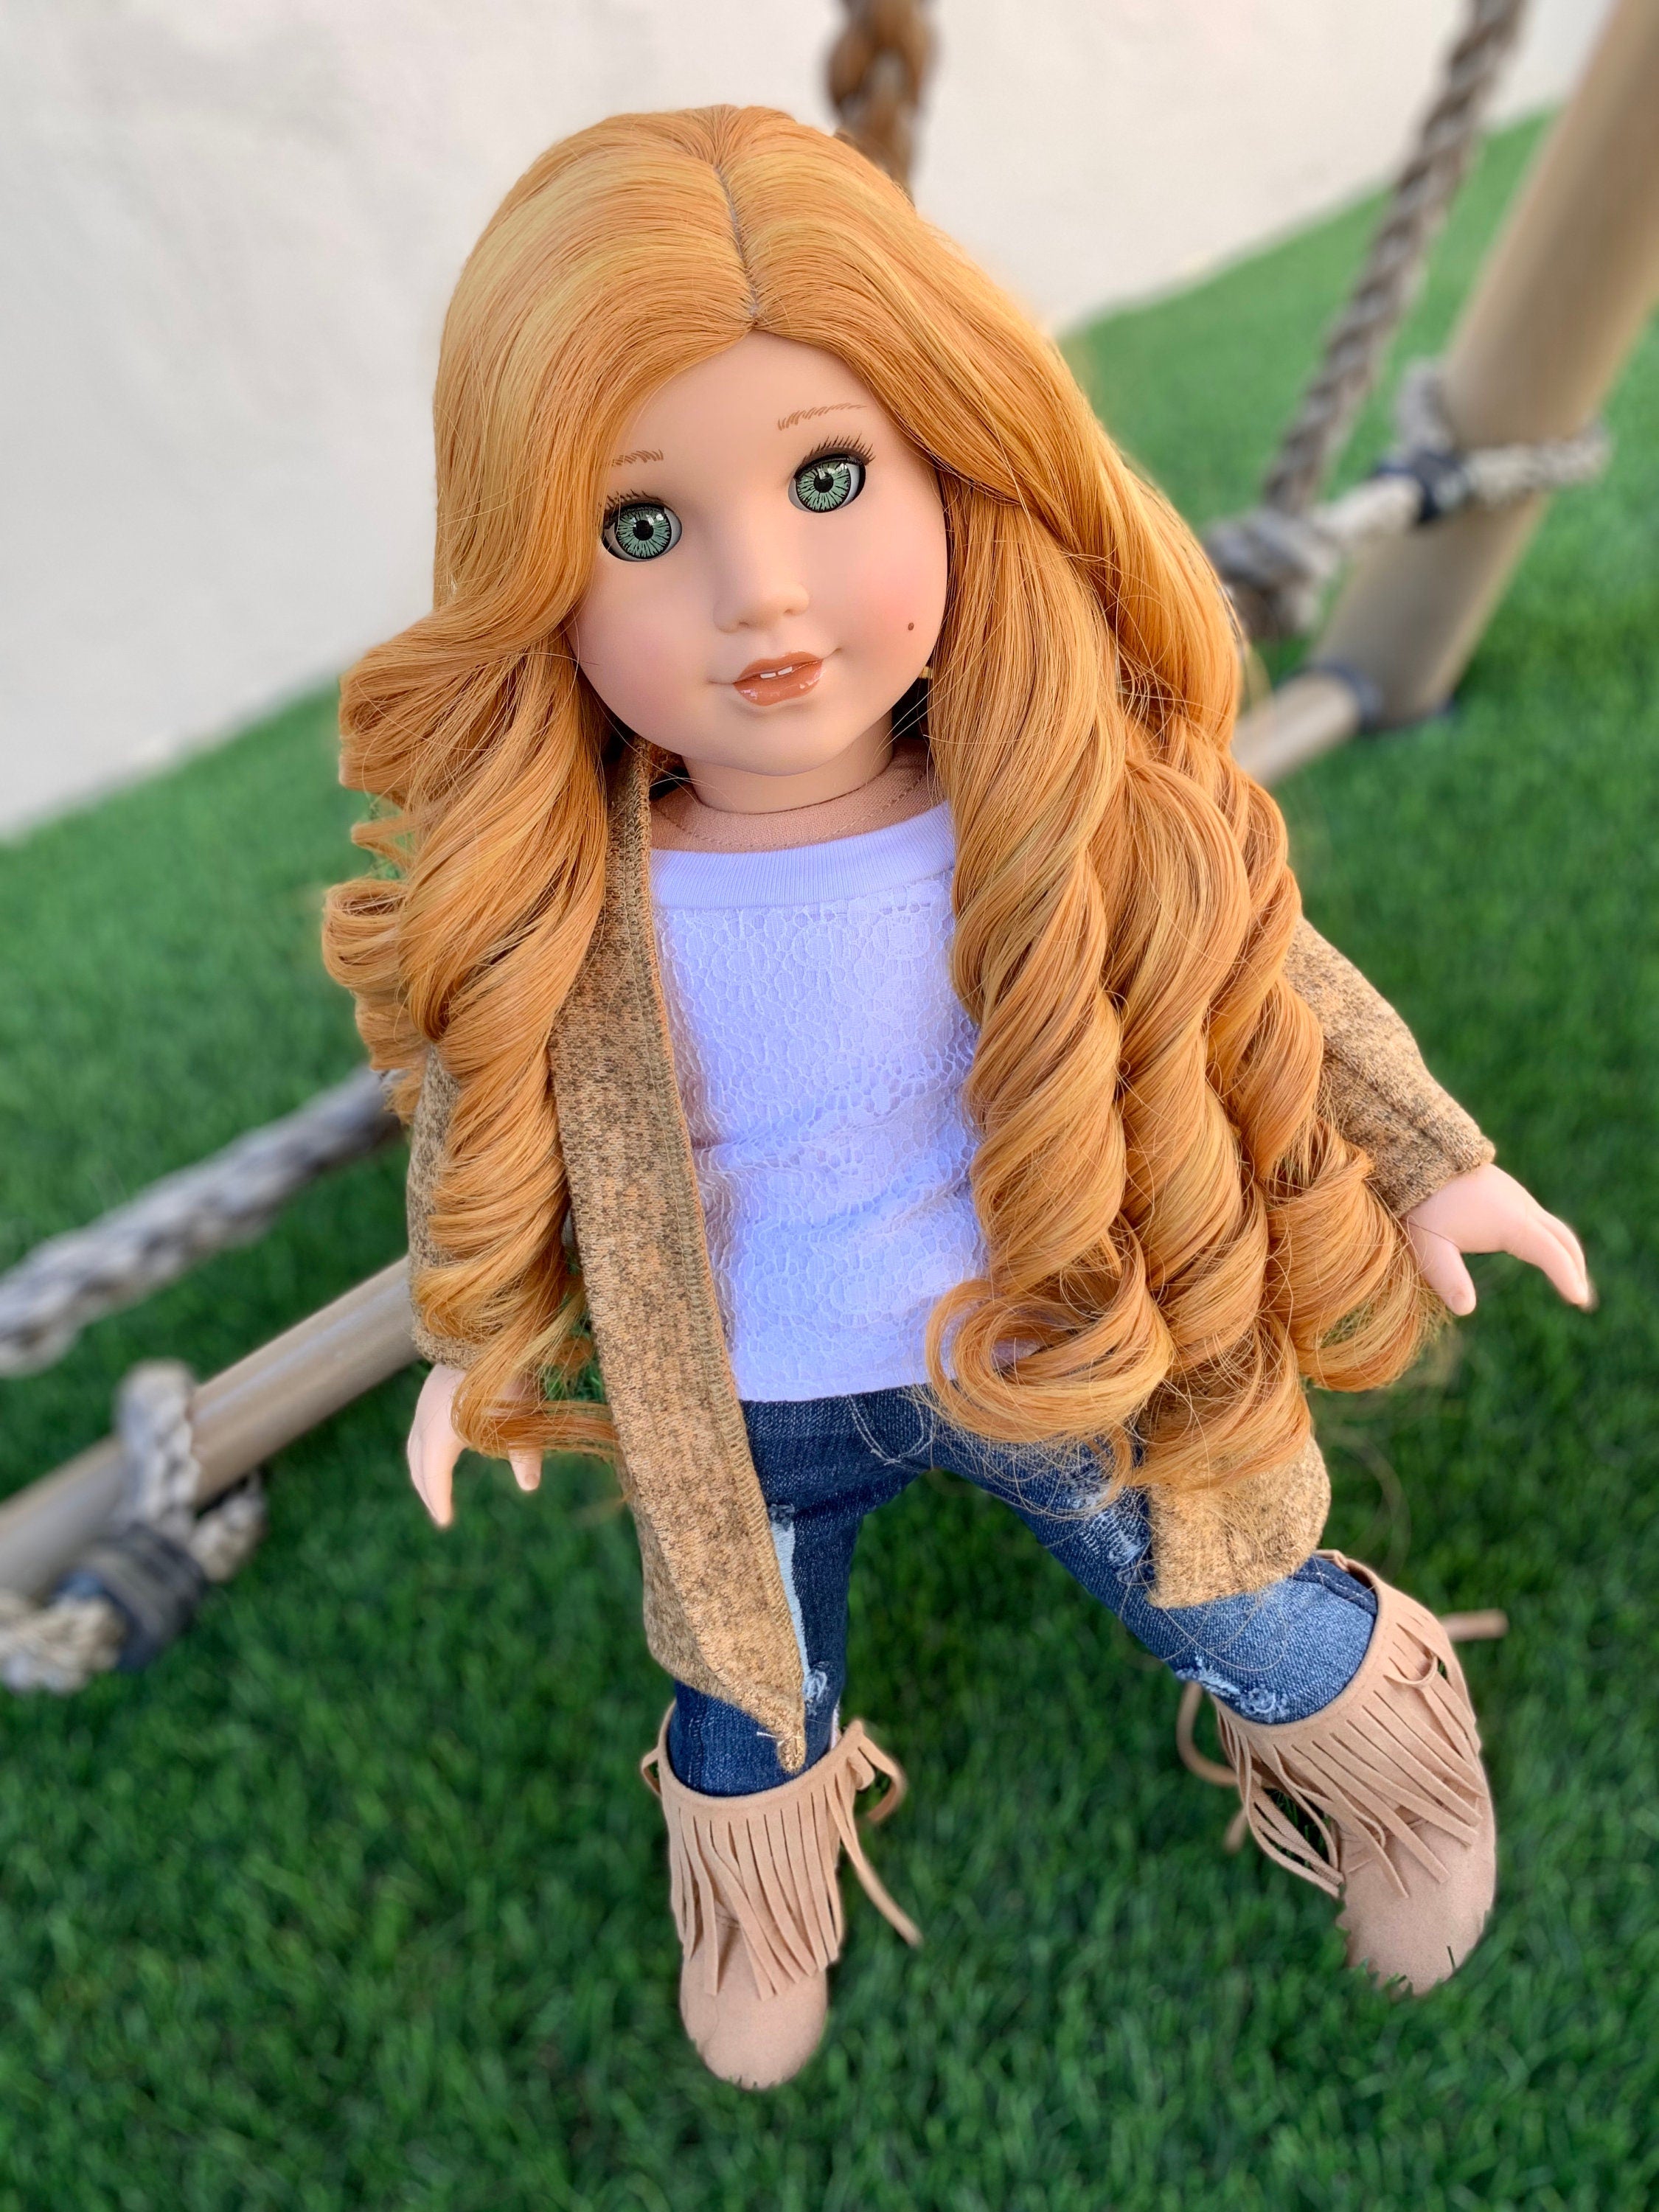 Custom doll wig for 18" American Girl Dolls - Heat Safe - Tangle Resistant - fits 10-11" head size of 18" dolls OG Blythe BJD Gotz carrot